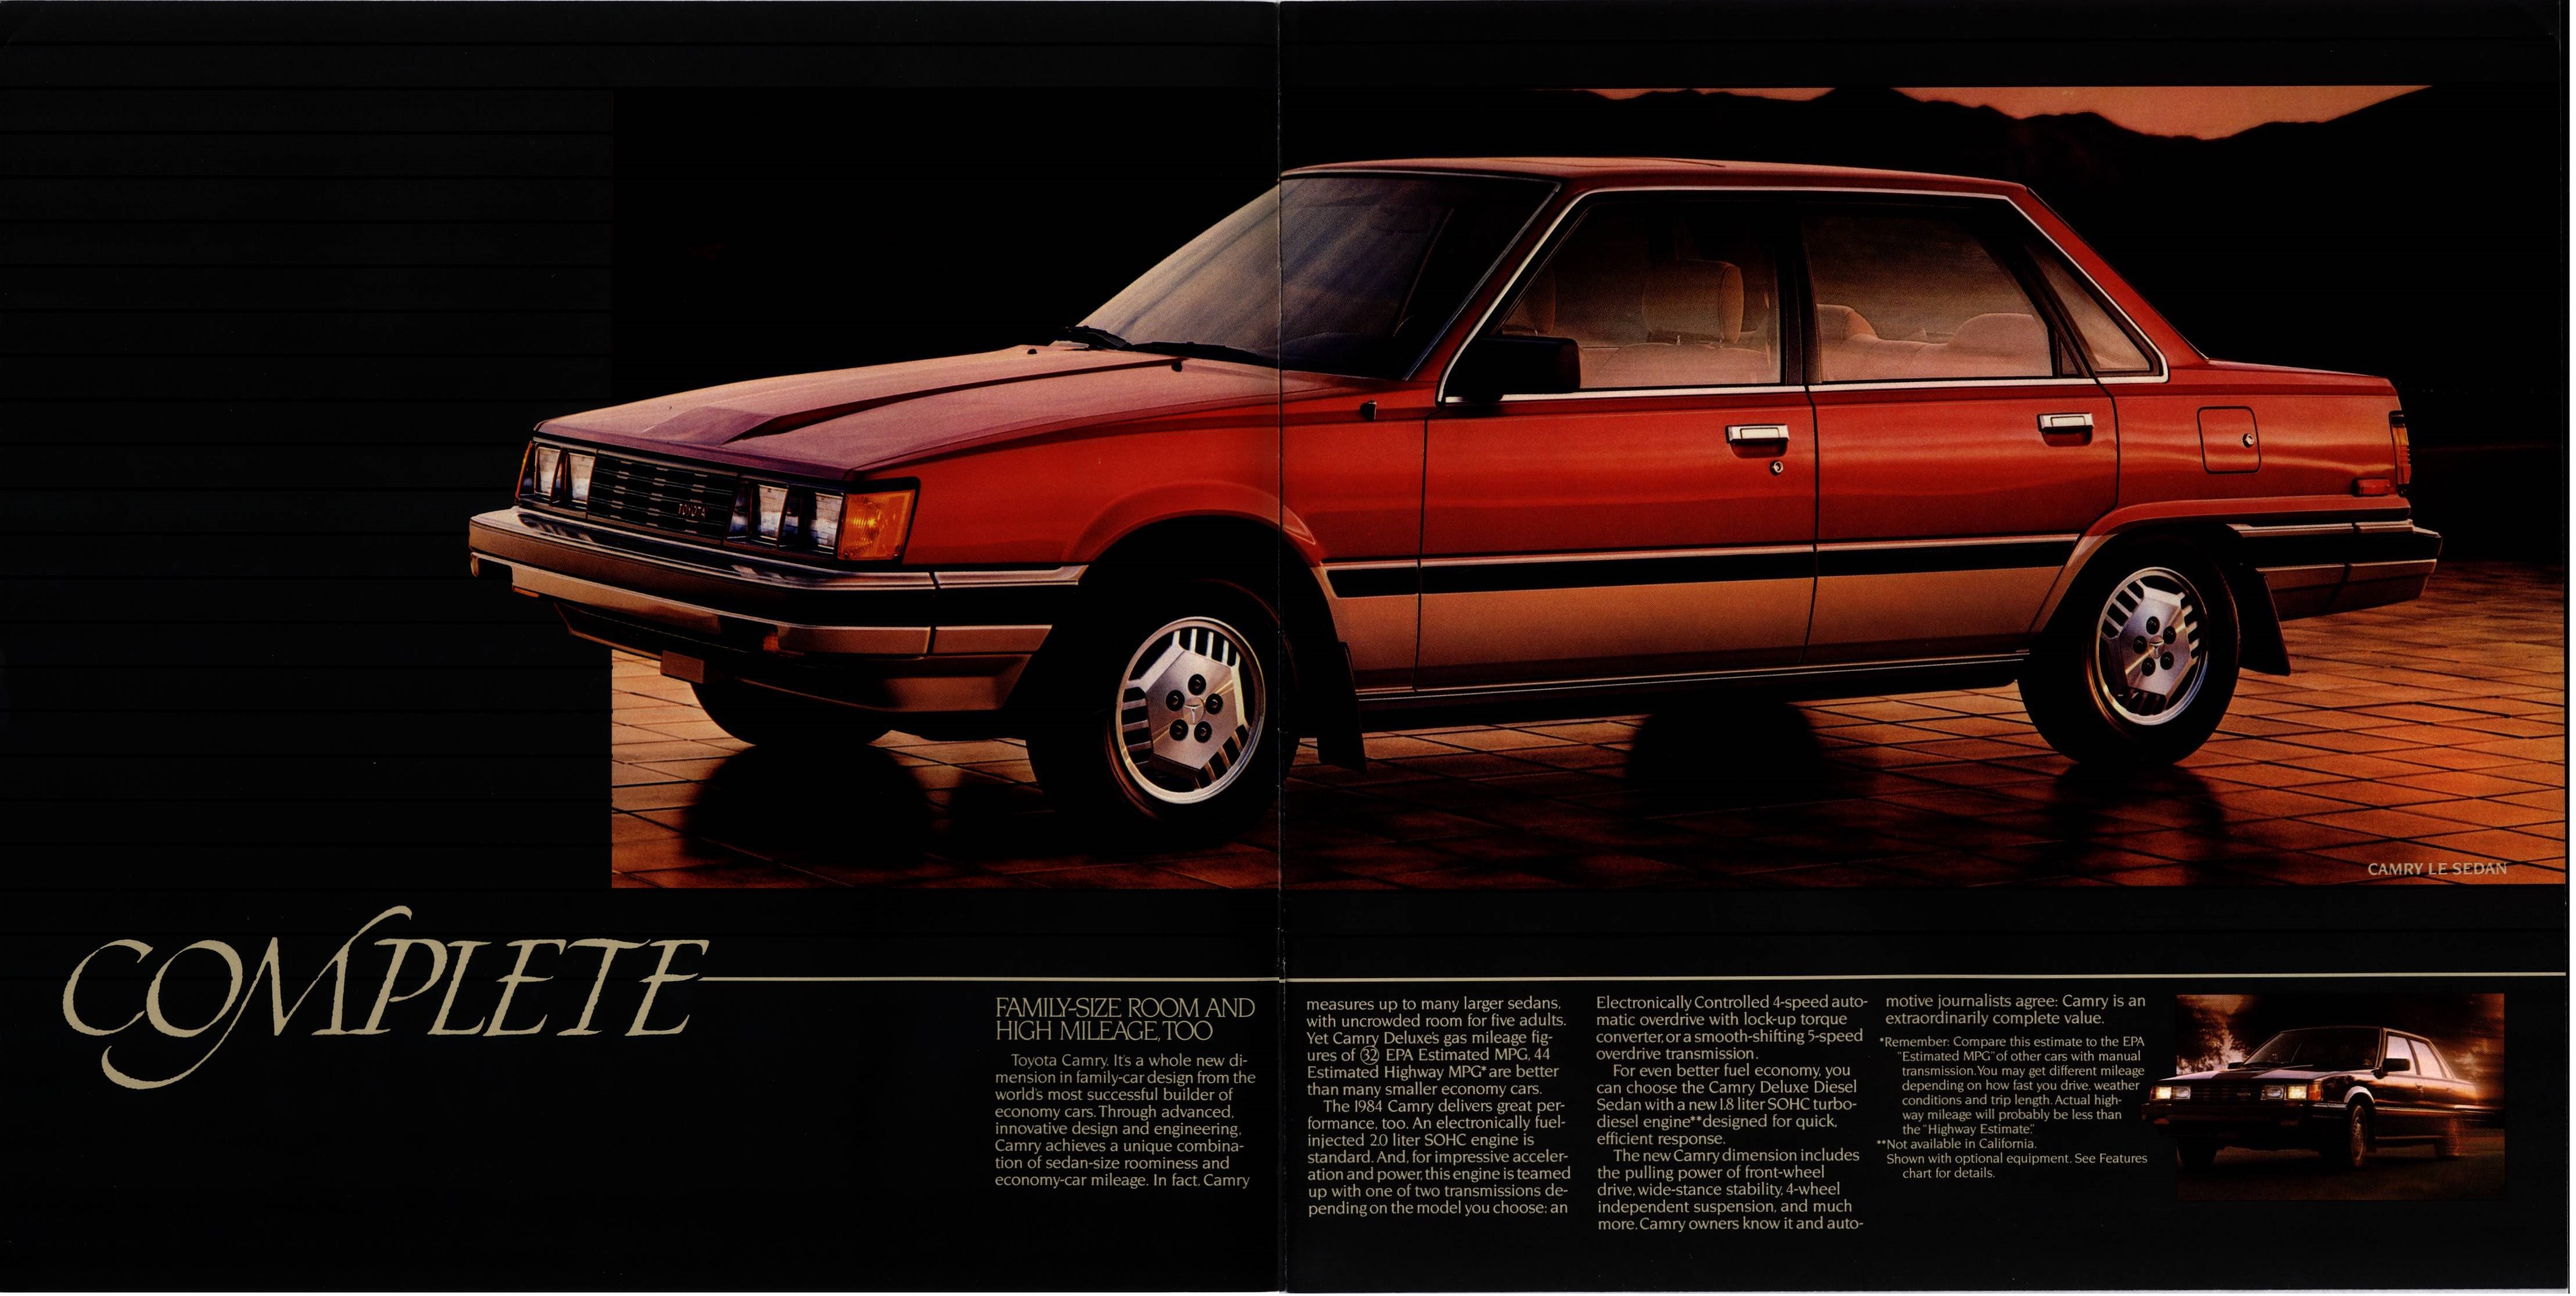 1984 Toyota Camry Brochure 02-03